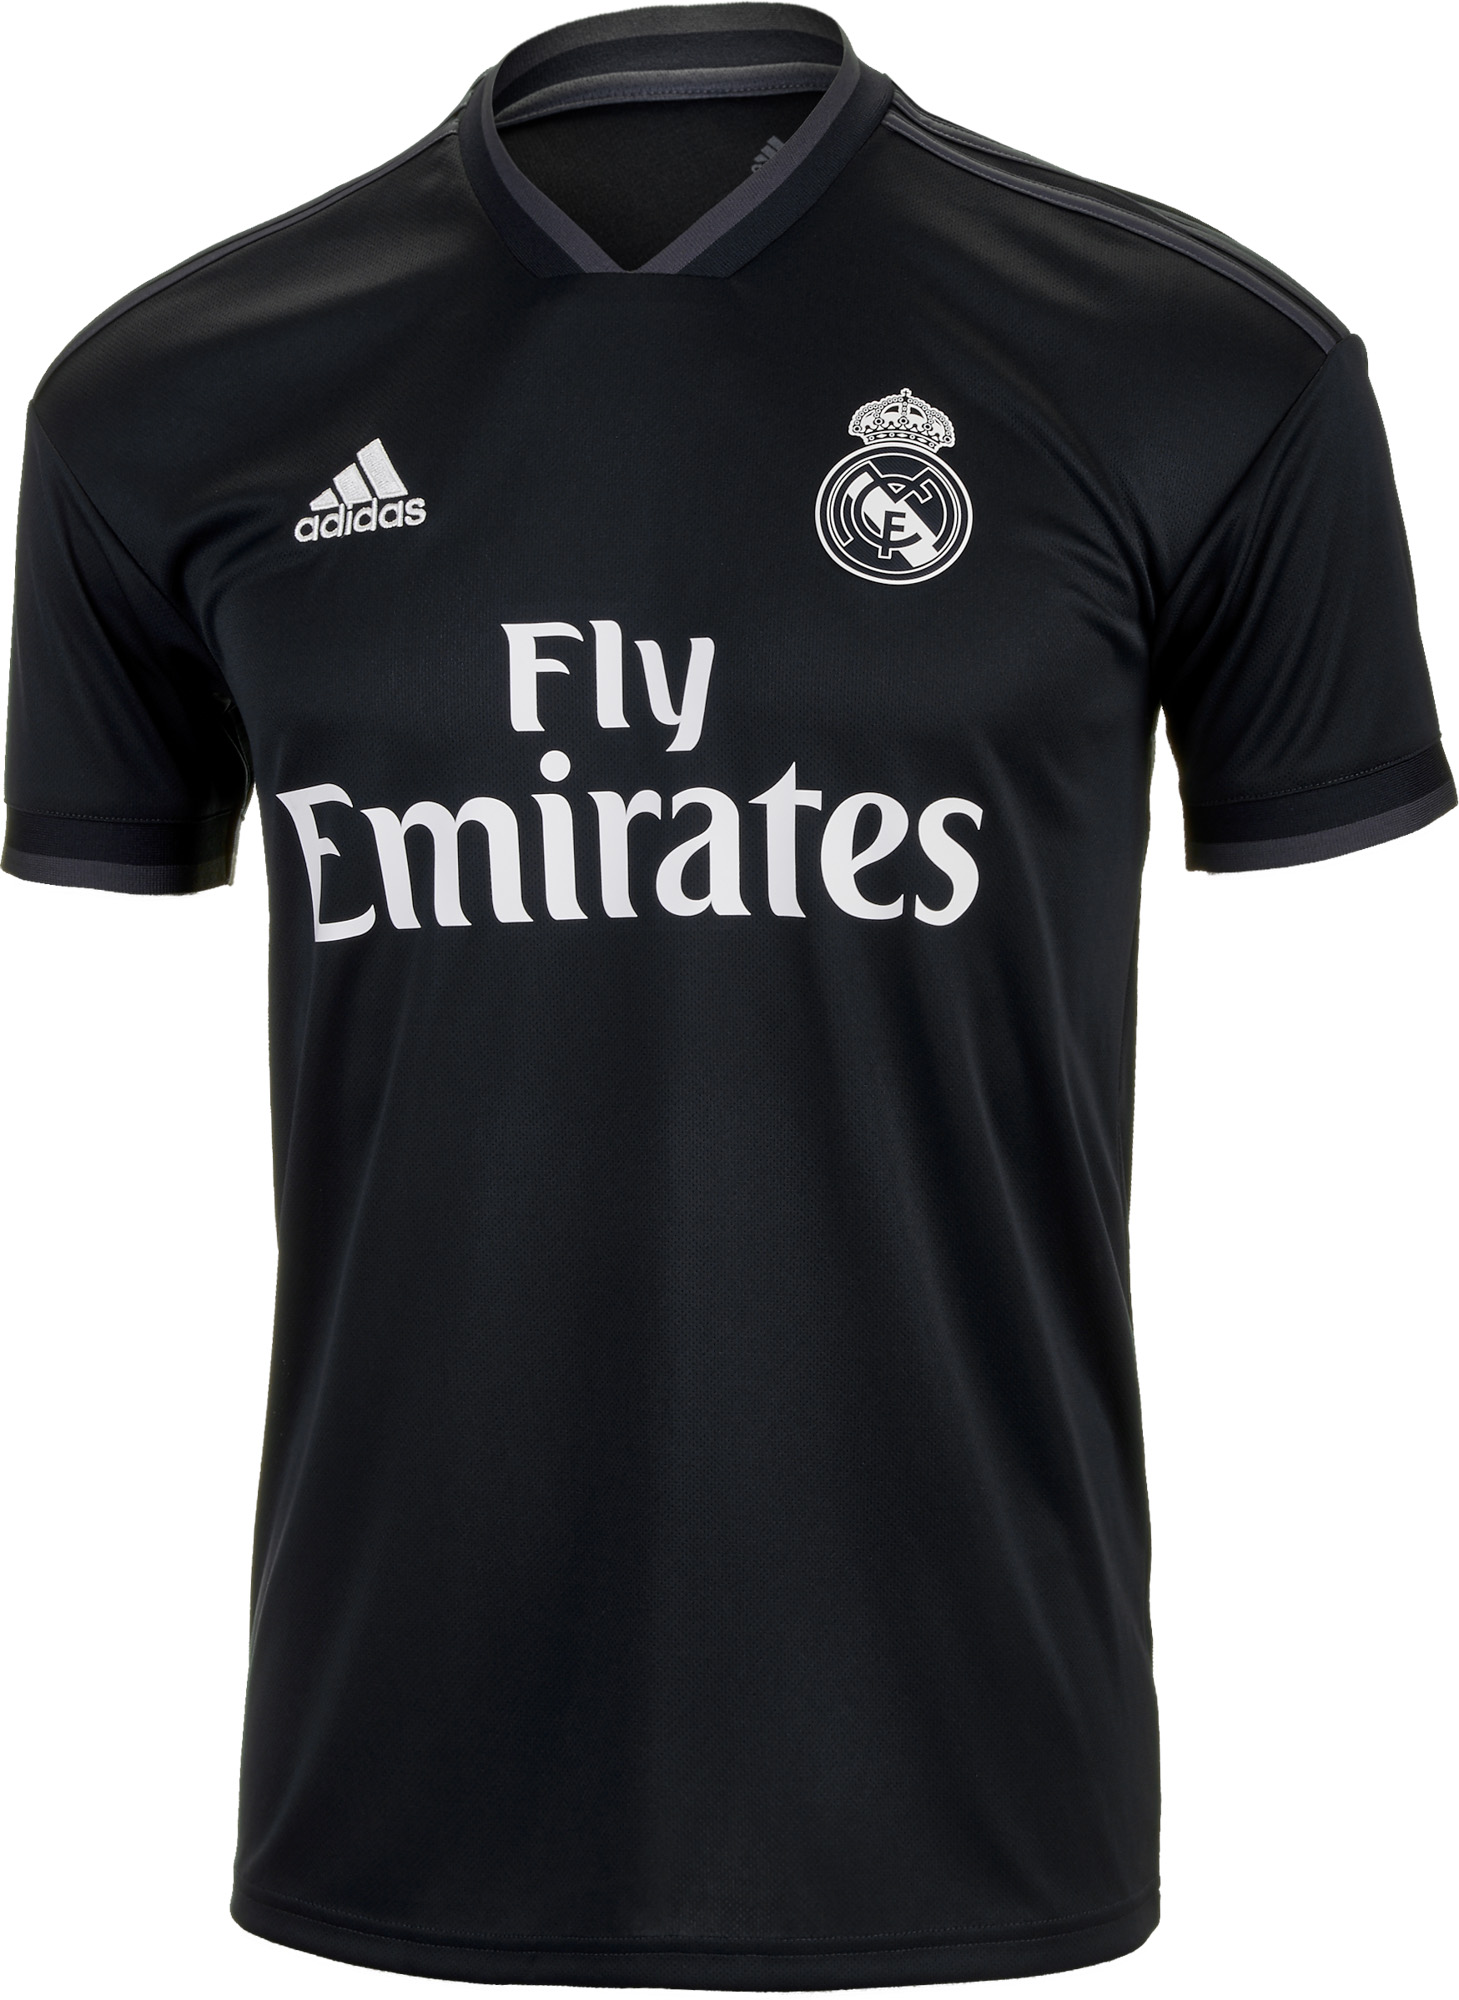 Kids 2018/19 adidas Real Madrid Away Jersey - Soccer Master